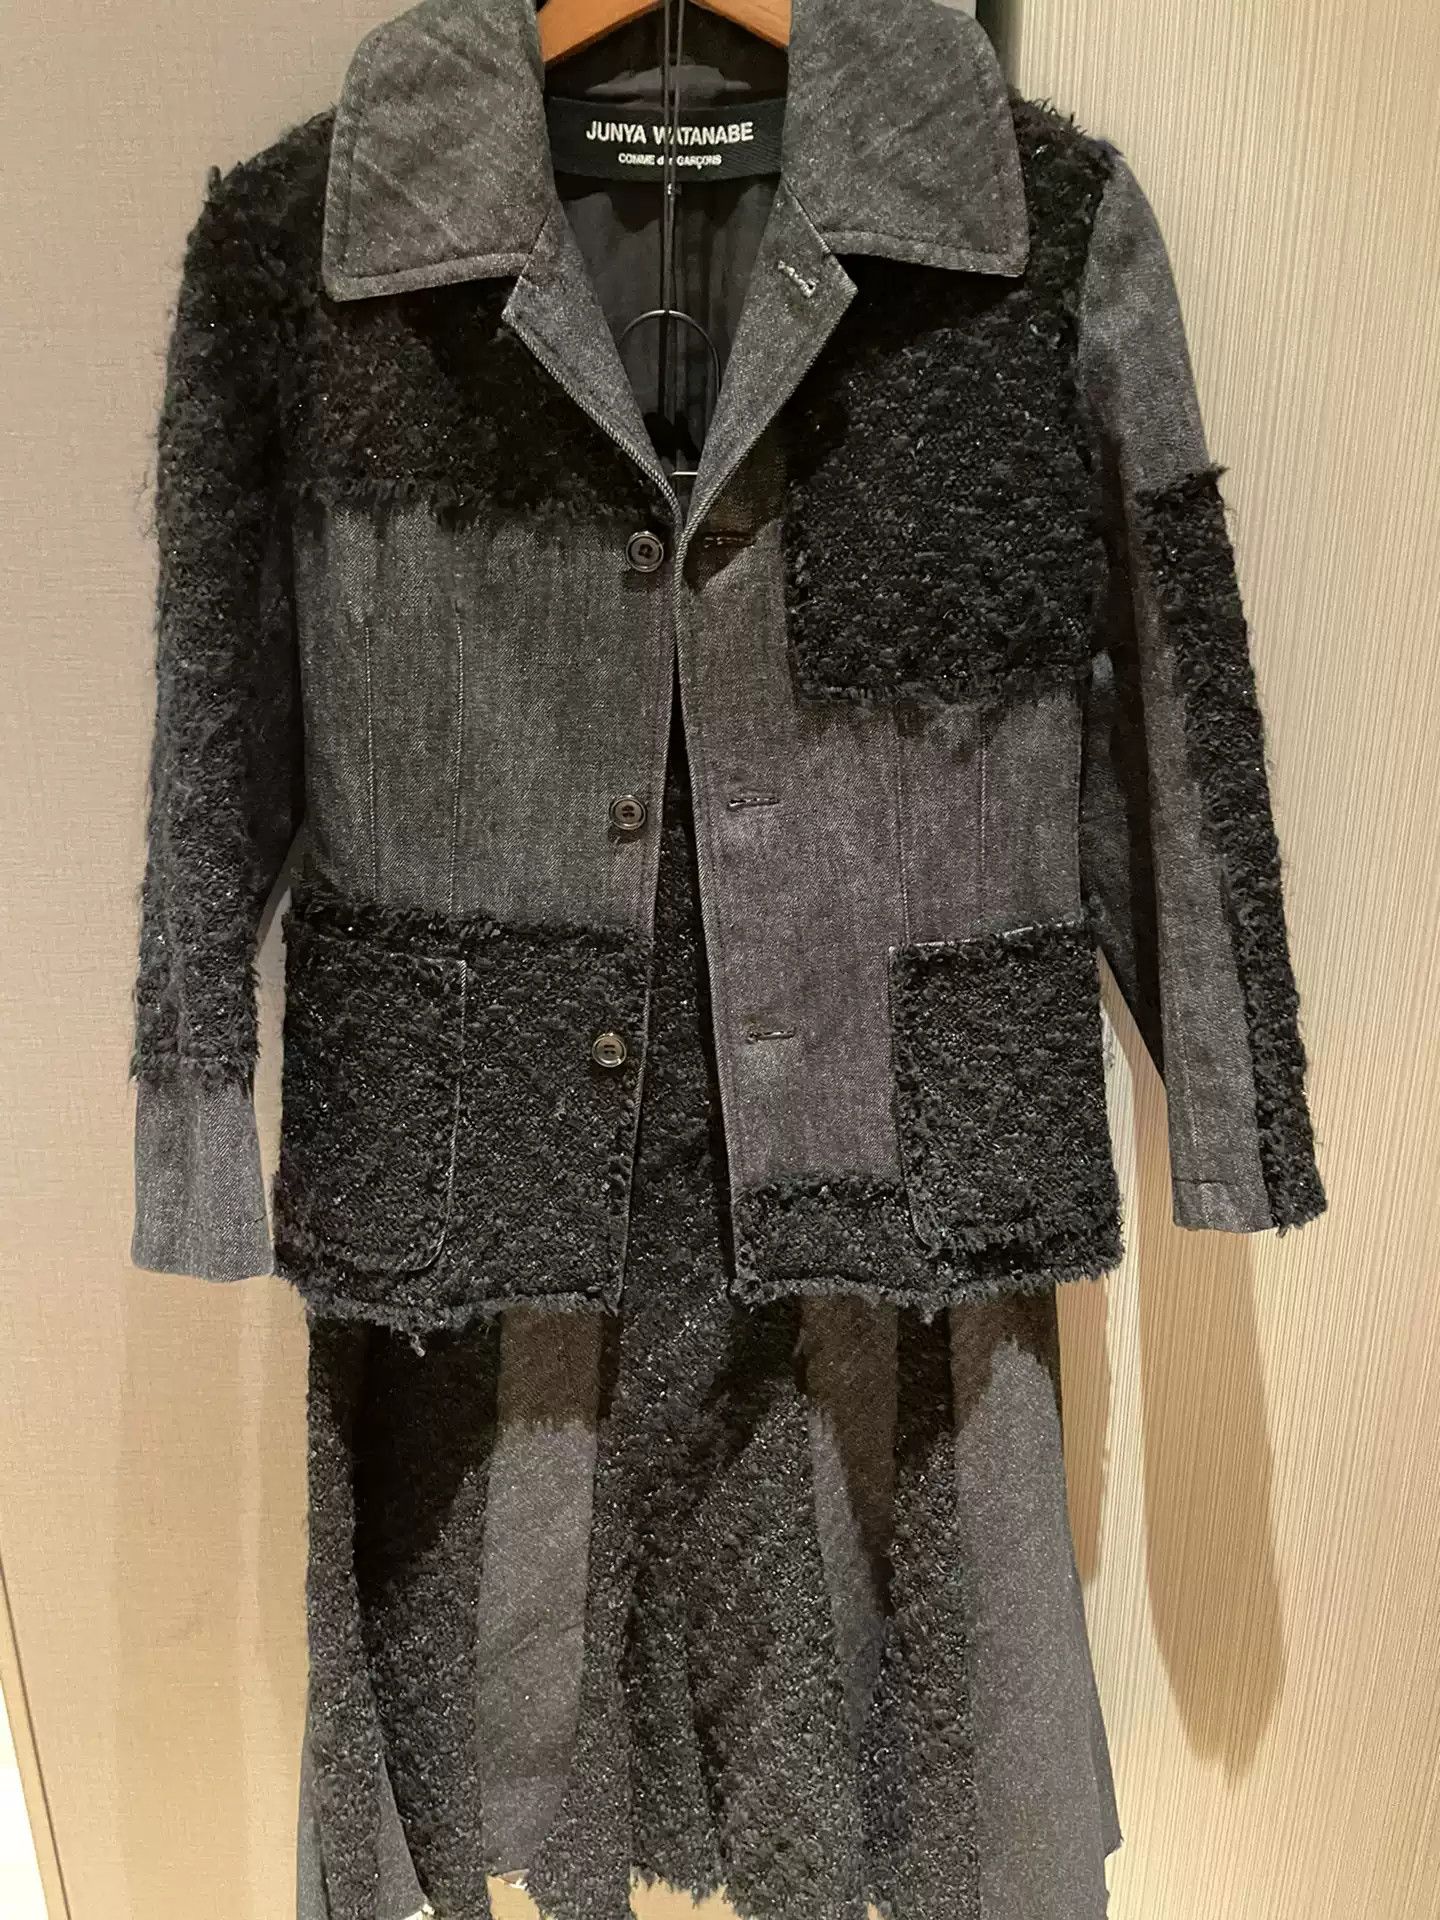 Junya Watanabe Junya Watanabe Tweed Suit Blazer and Midi Dress Size S ...